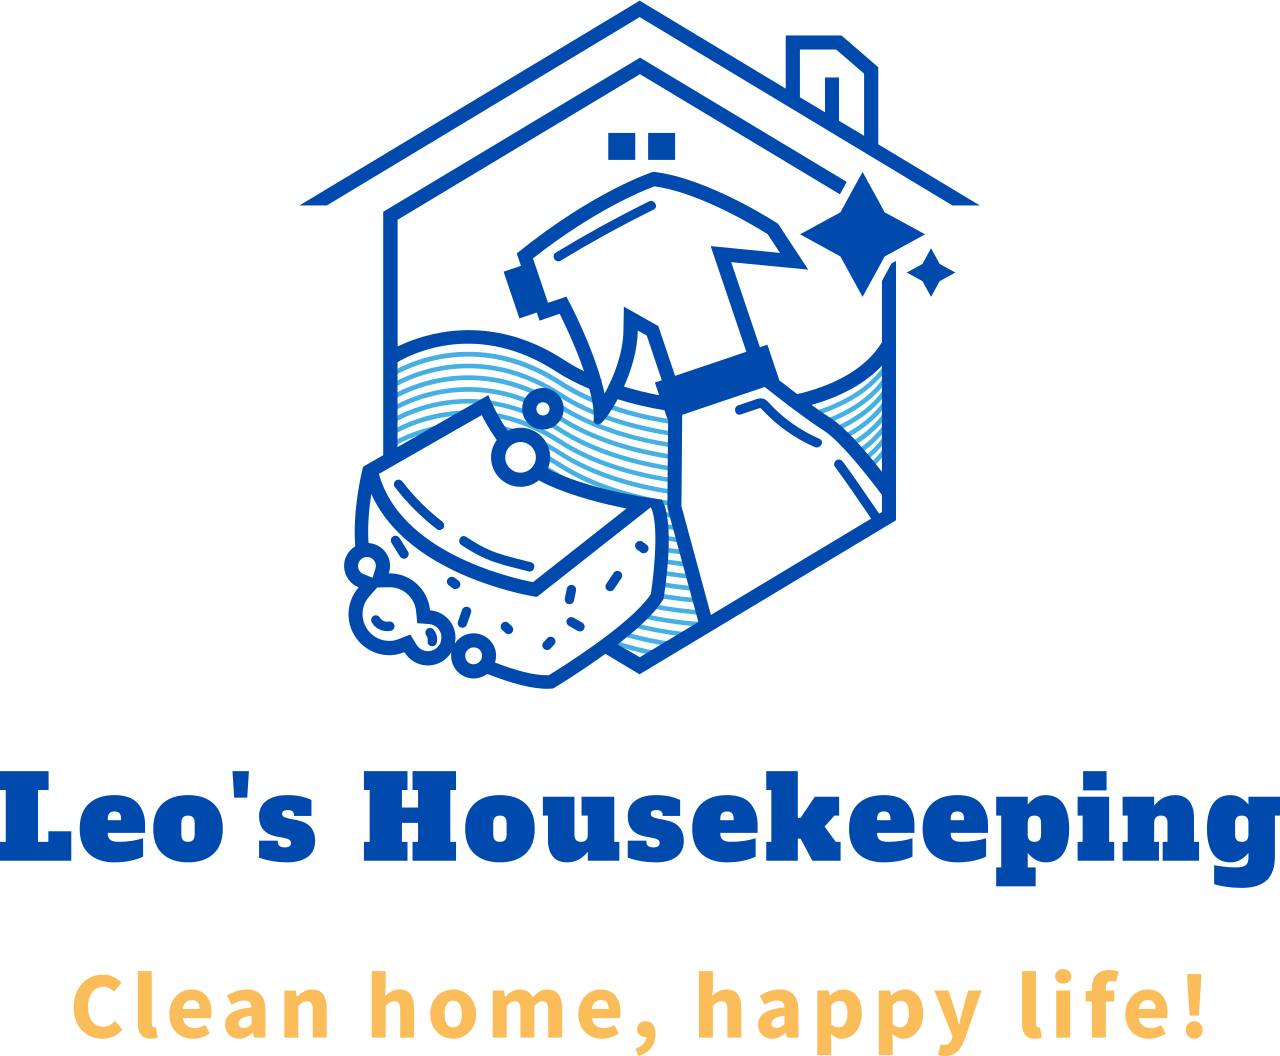 Leo's Housekeeping 's logo